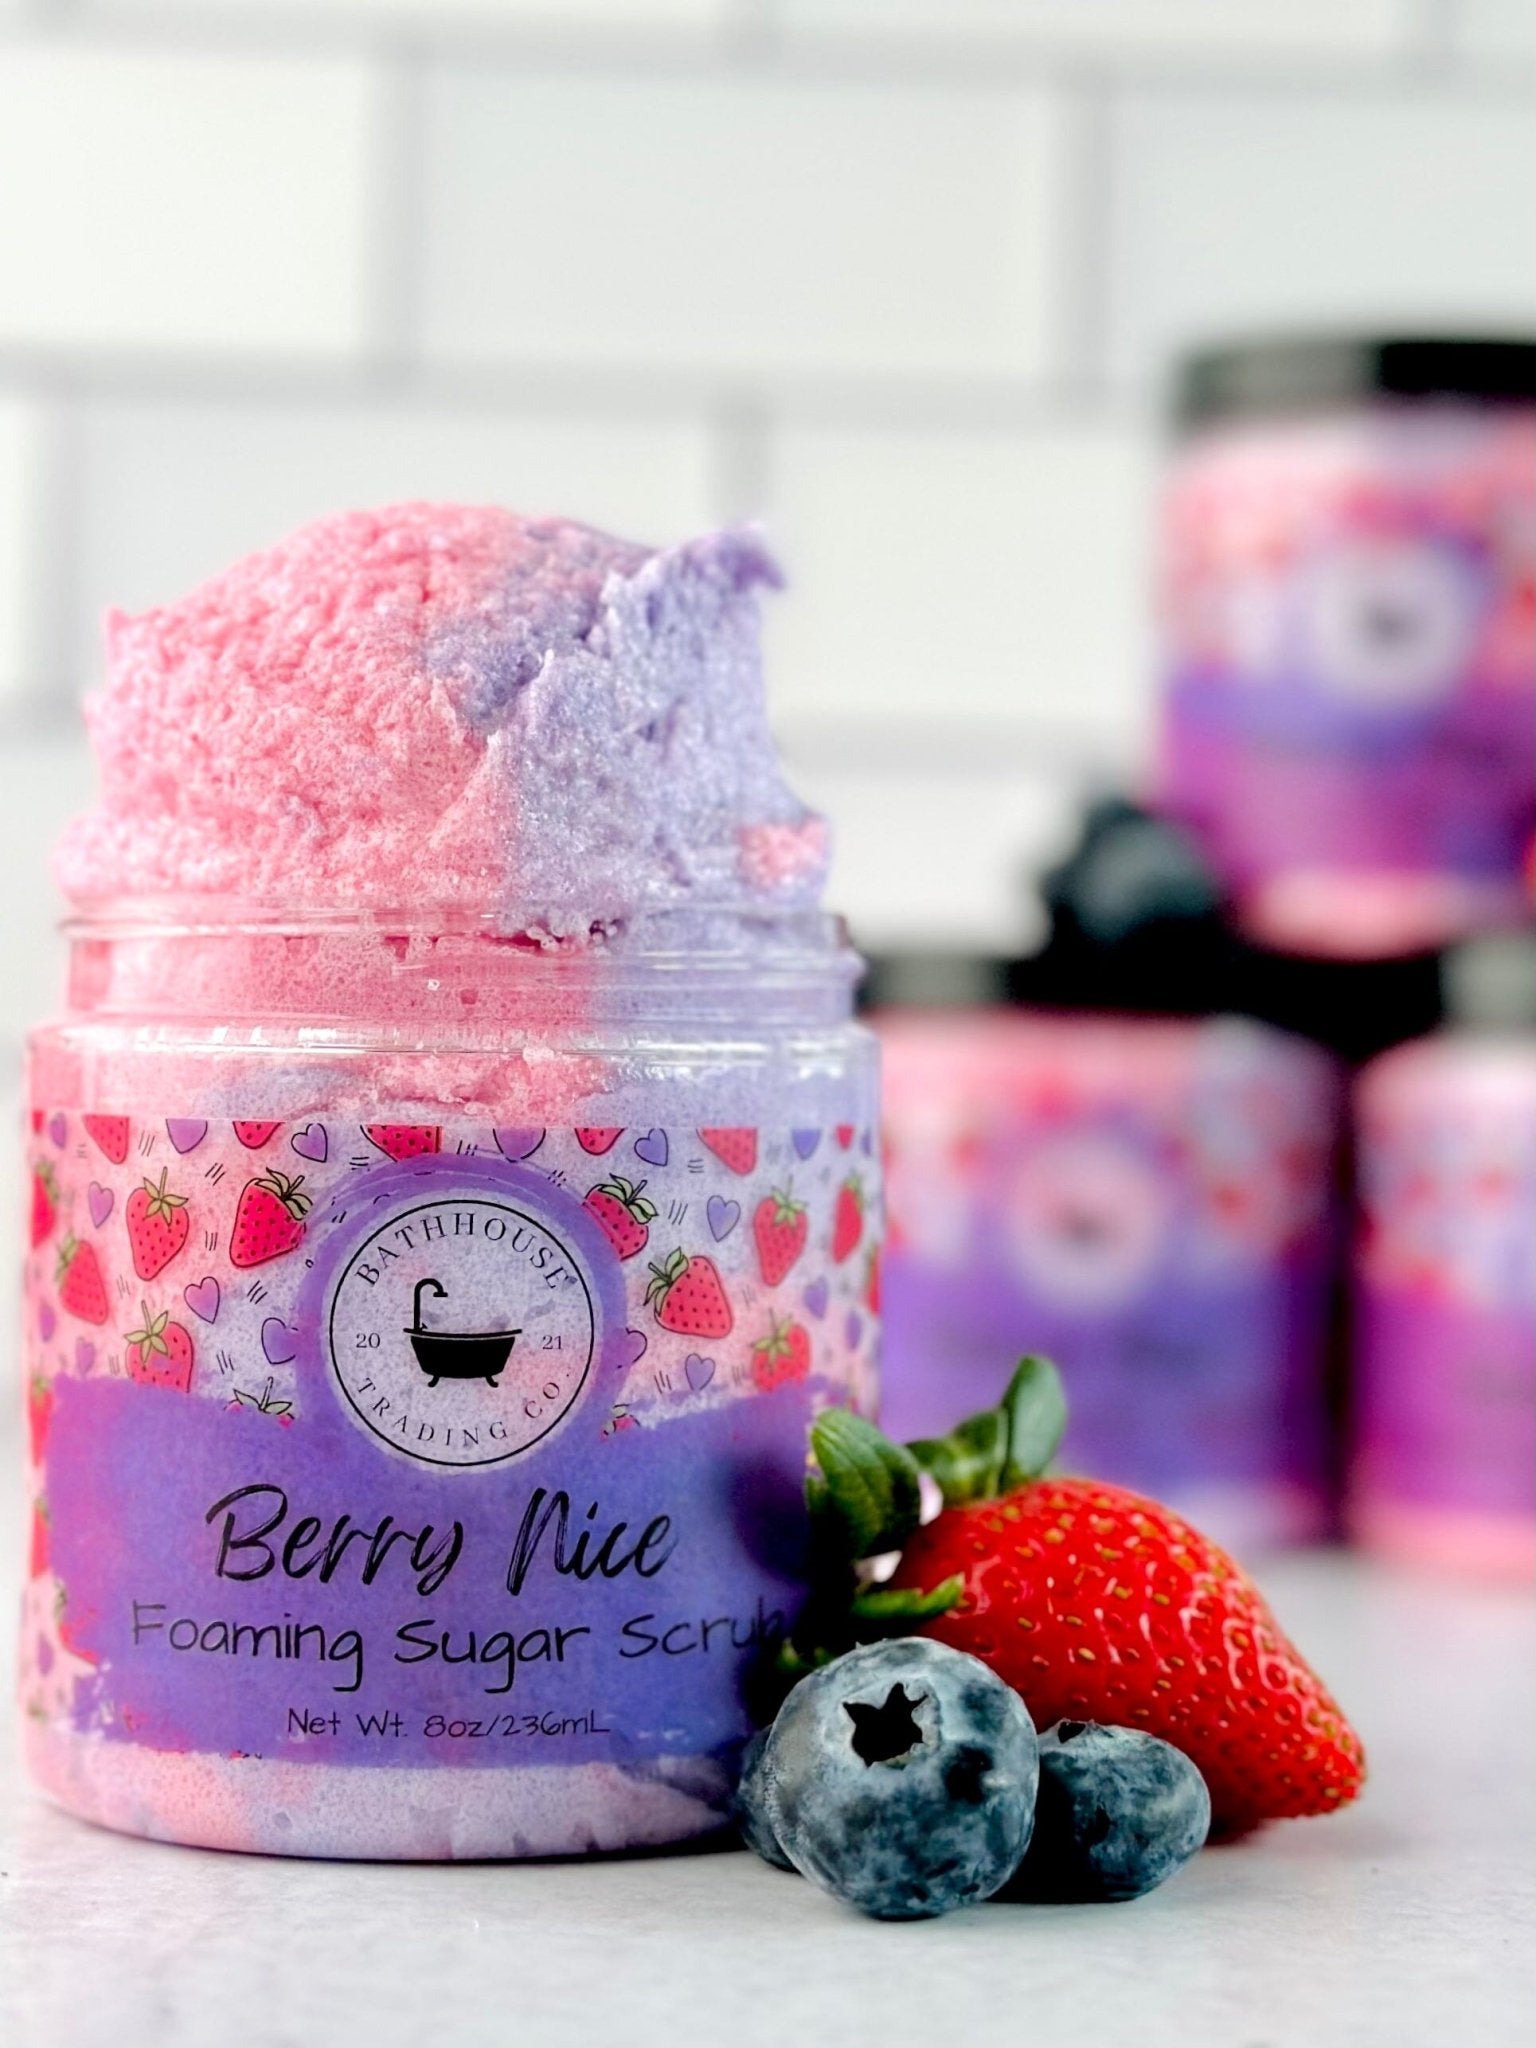 Berry Nice Foaming Sugar Scrub - Bathhouse Trading Company